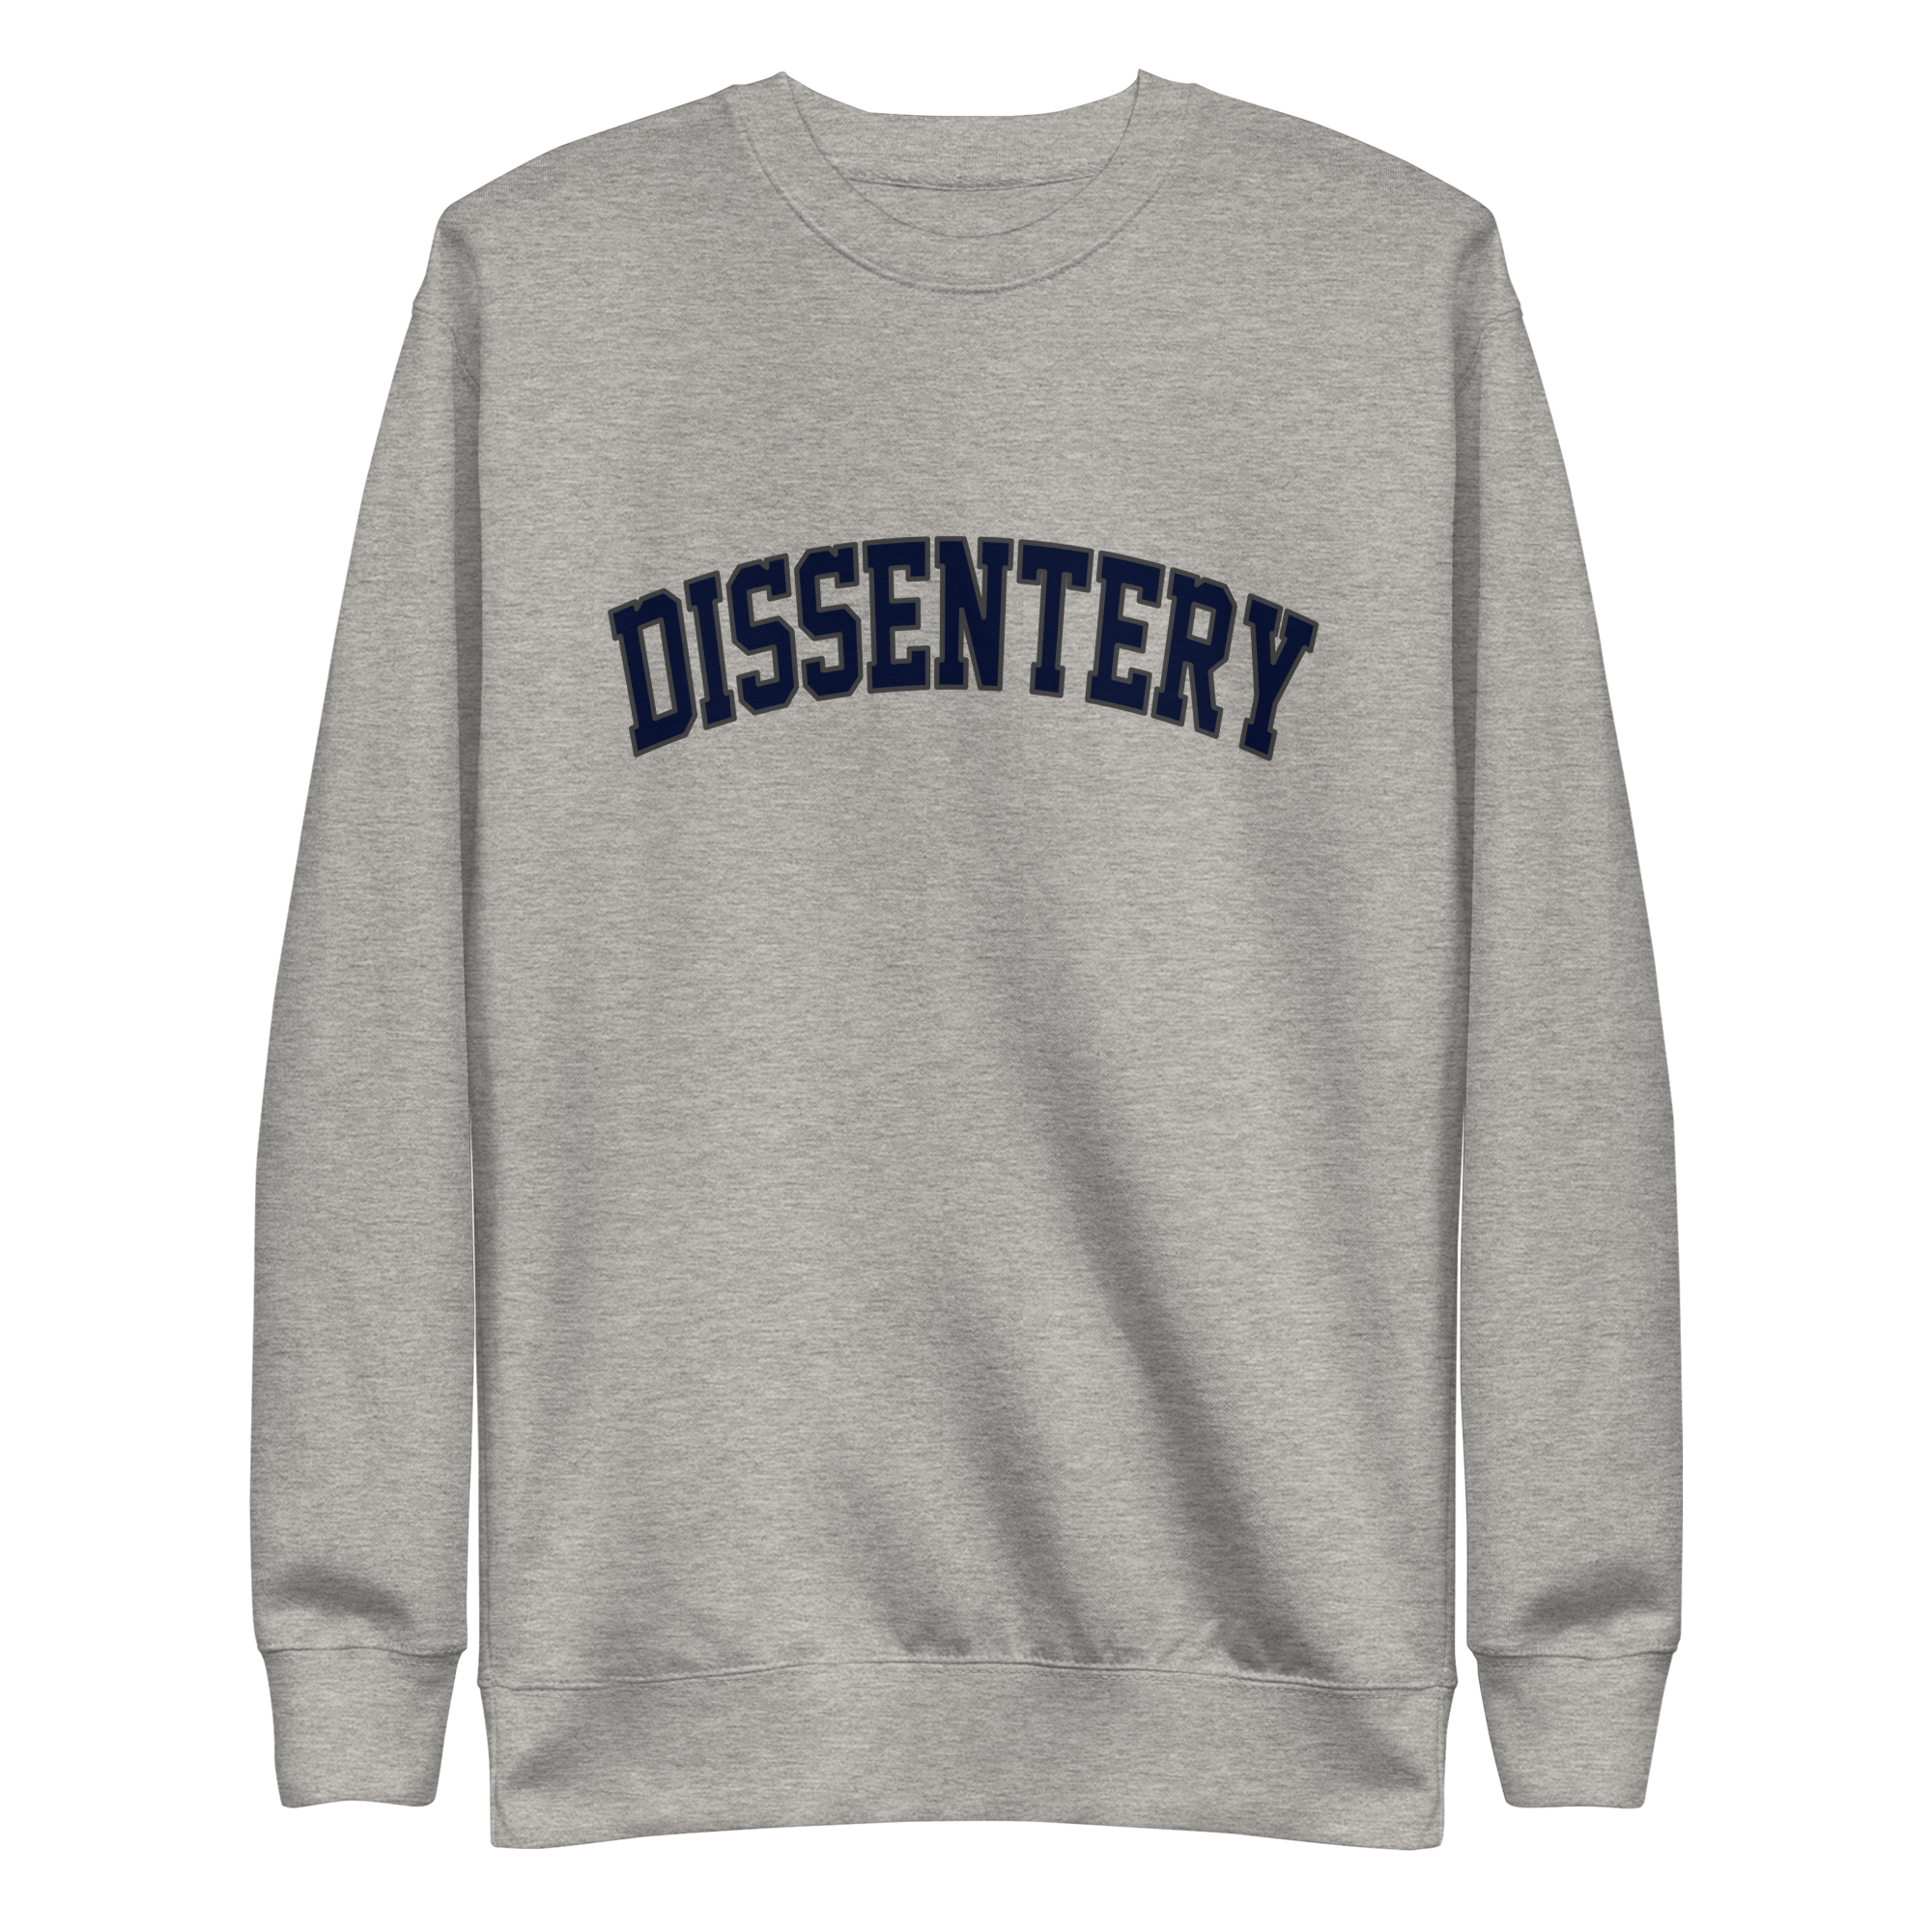 Dissentery Sweatshirt Crewneck. – Good Shirts